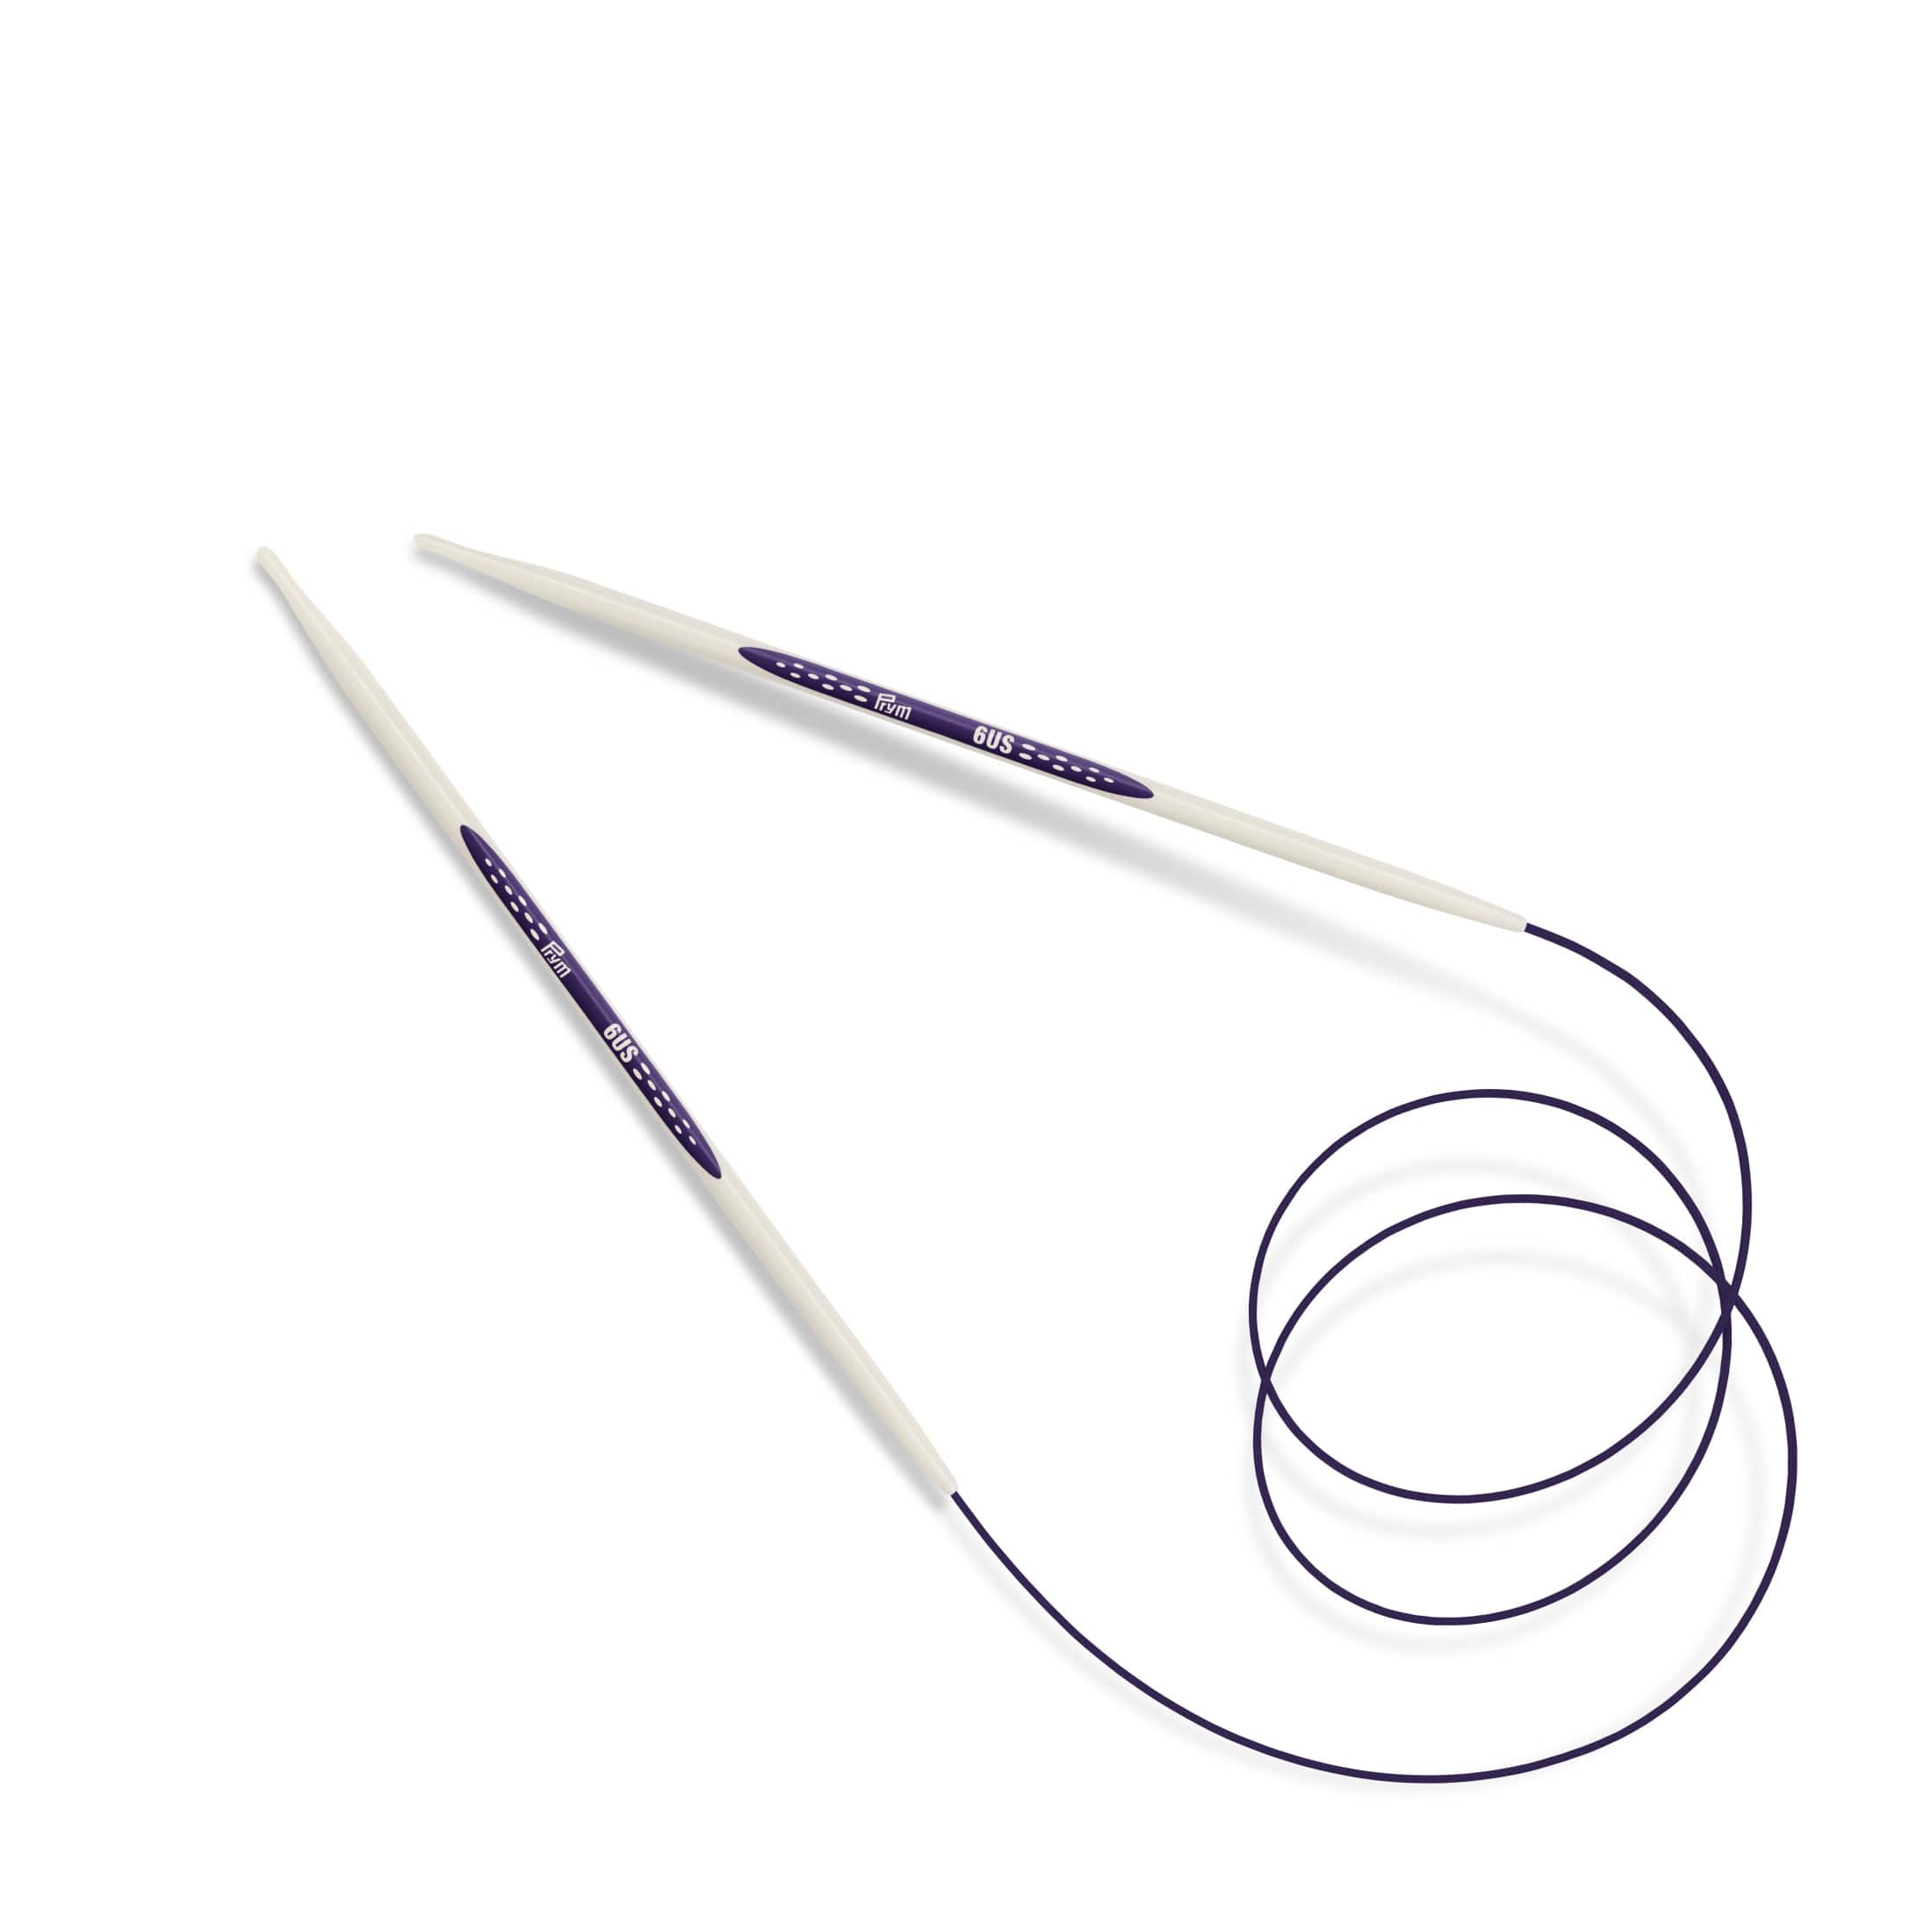 Prym 32 inch Circular Knitting Needles Set